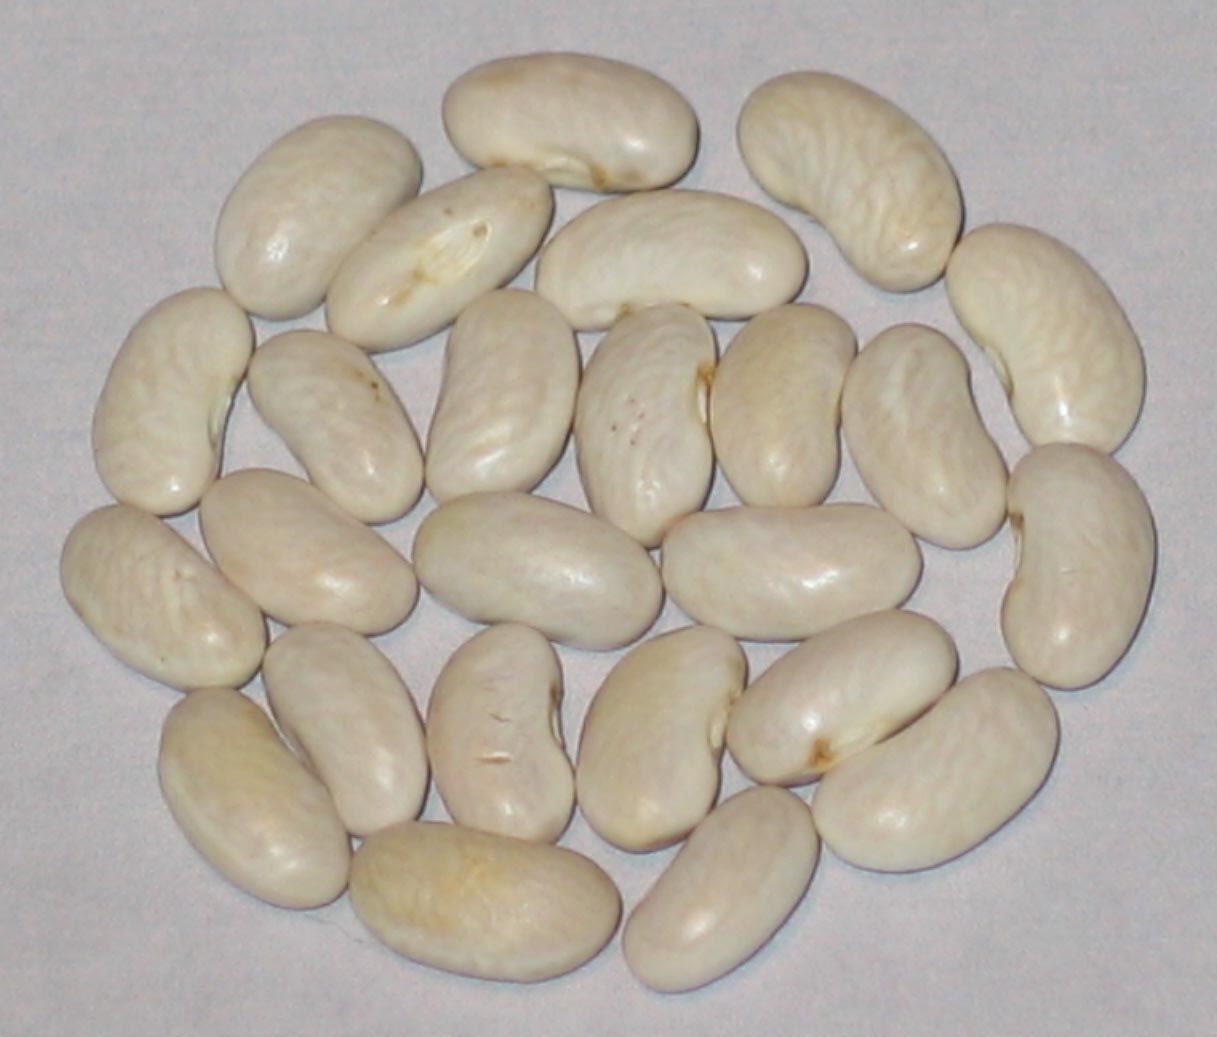 image of Hastings beans